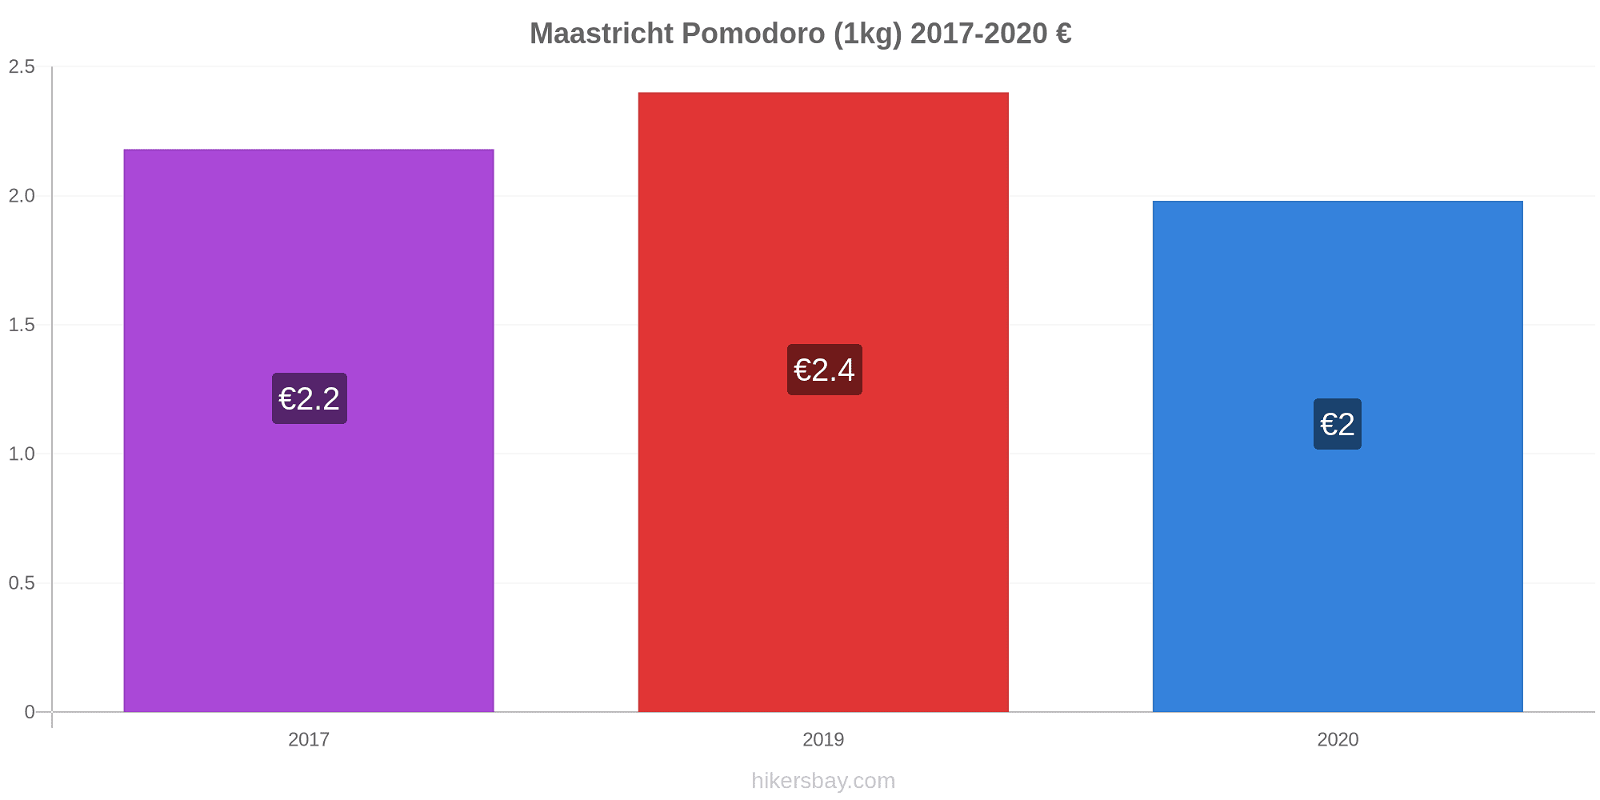 Maastricht variazioni di prezzo Pomodoro (1kg) hikersbay.com